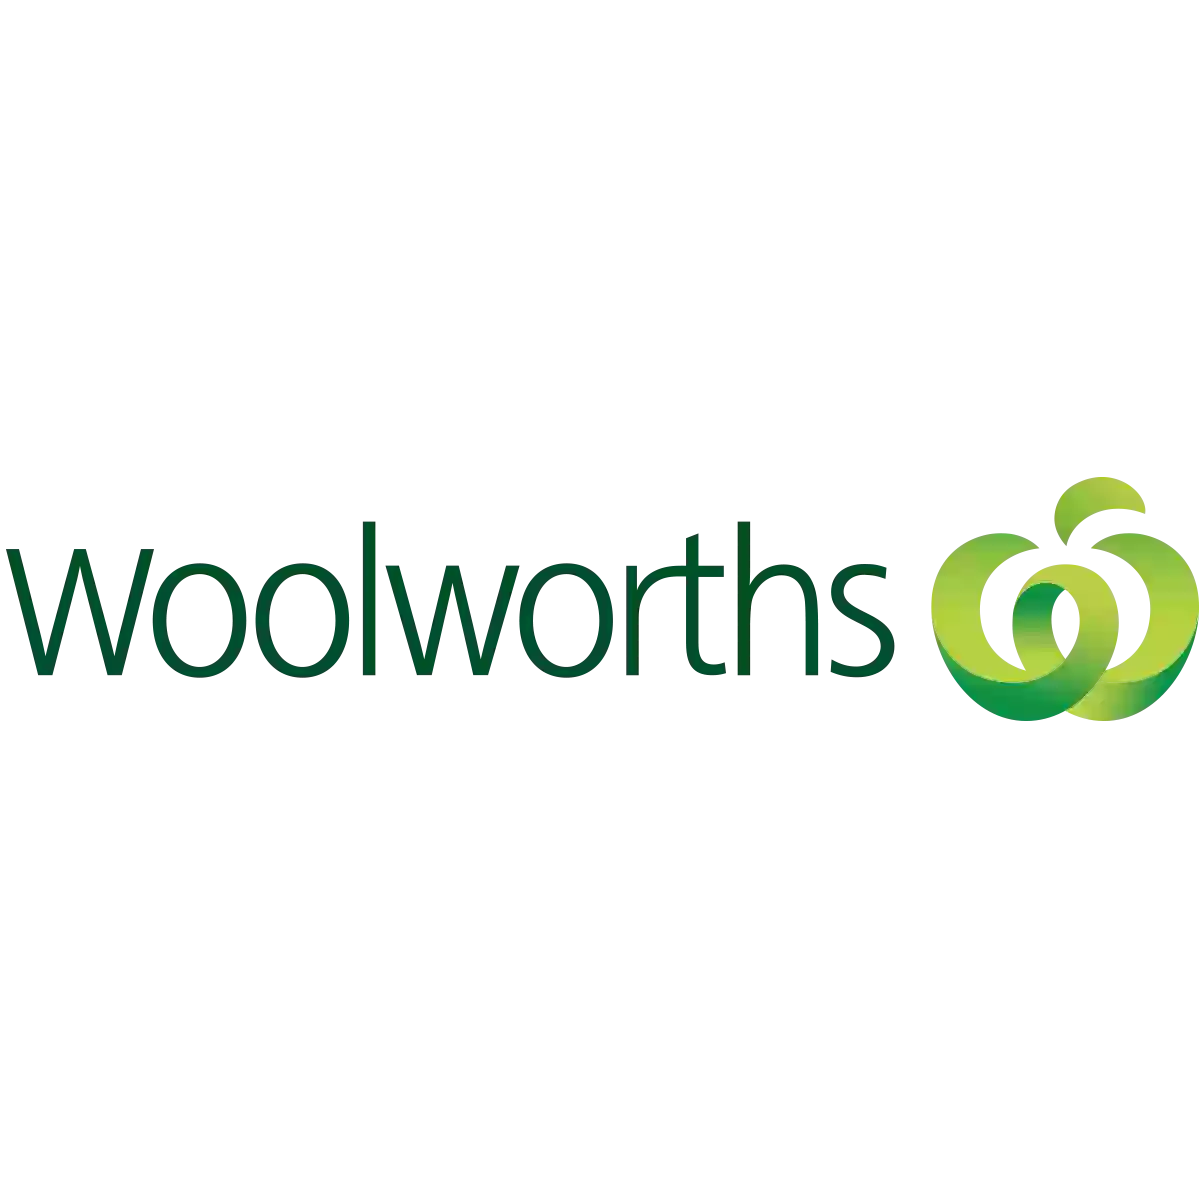 Woolworths Brunswick